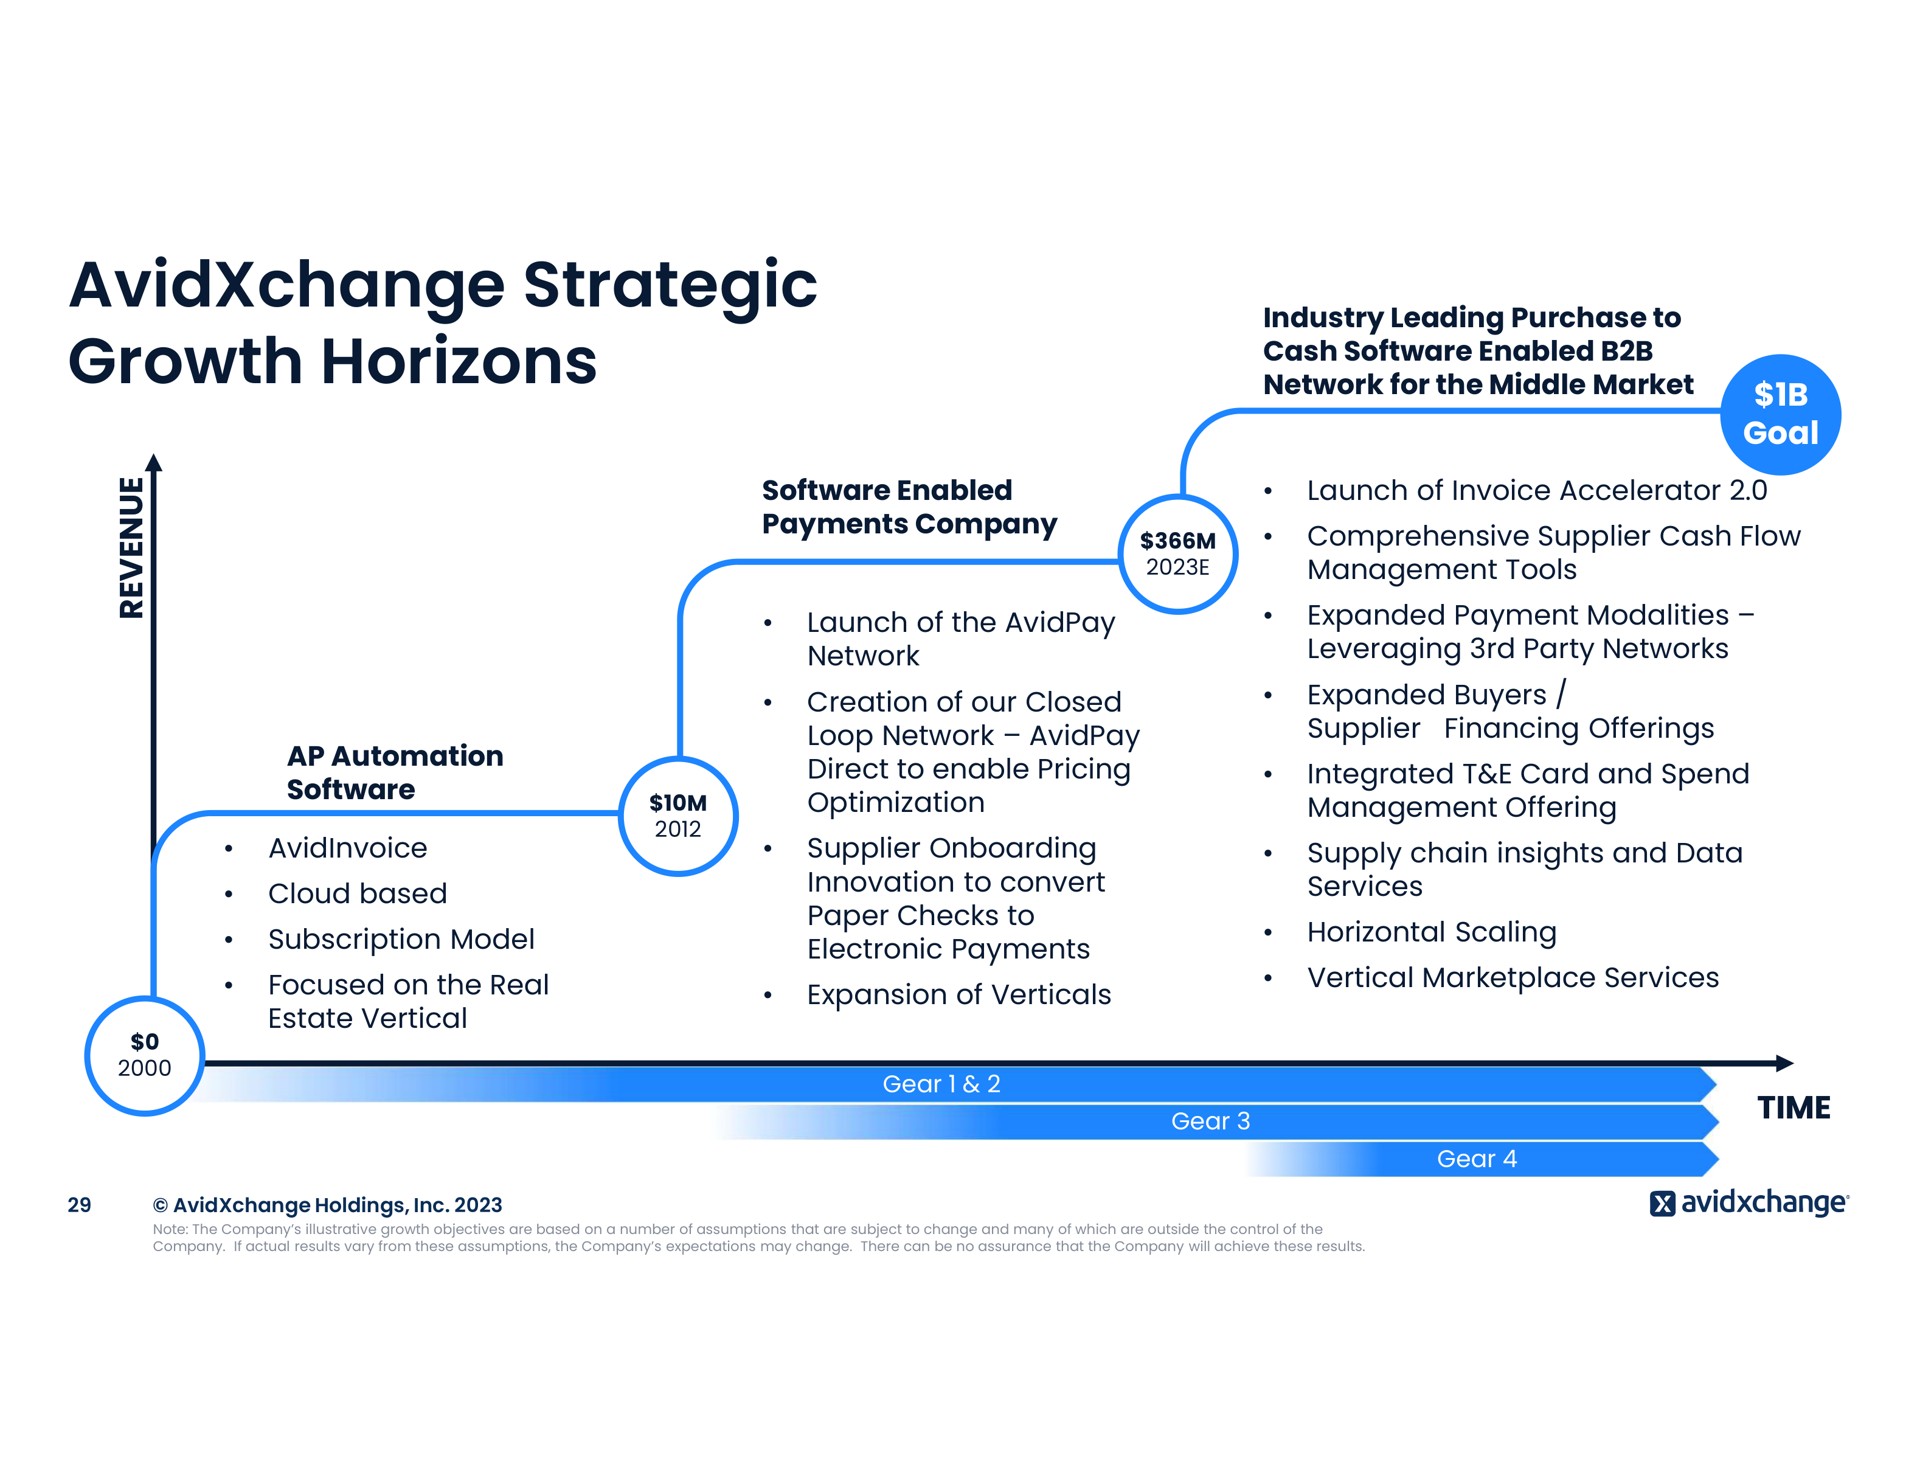 strategic growth horizons time | AvidXchange